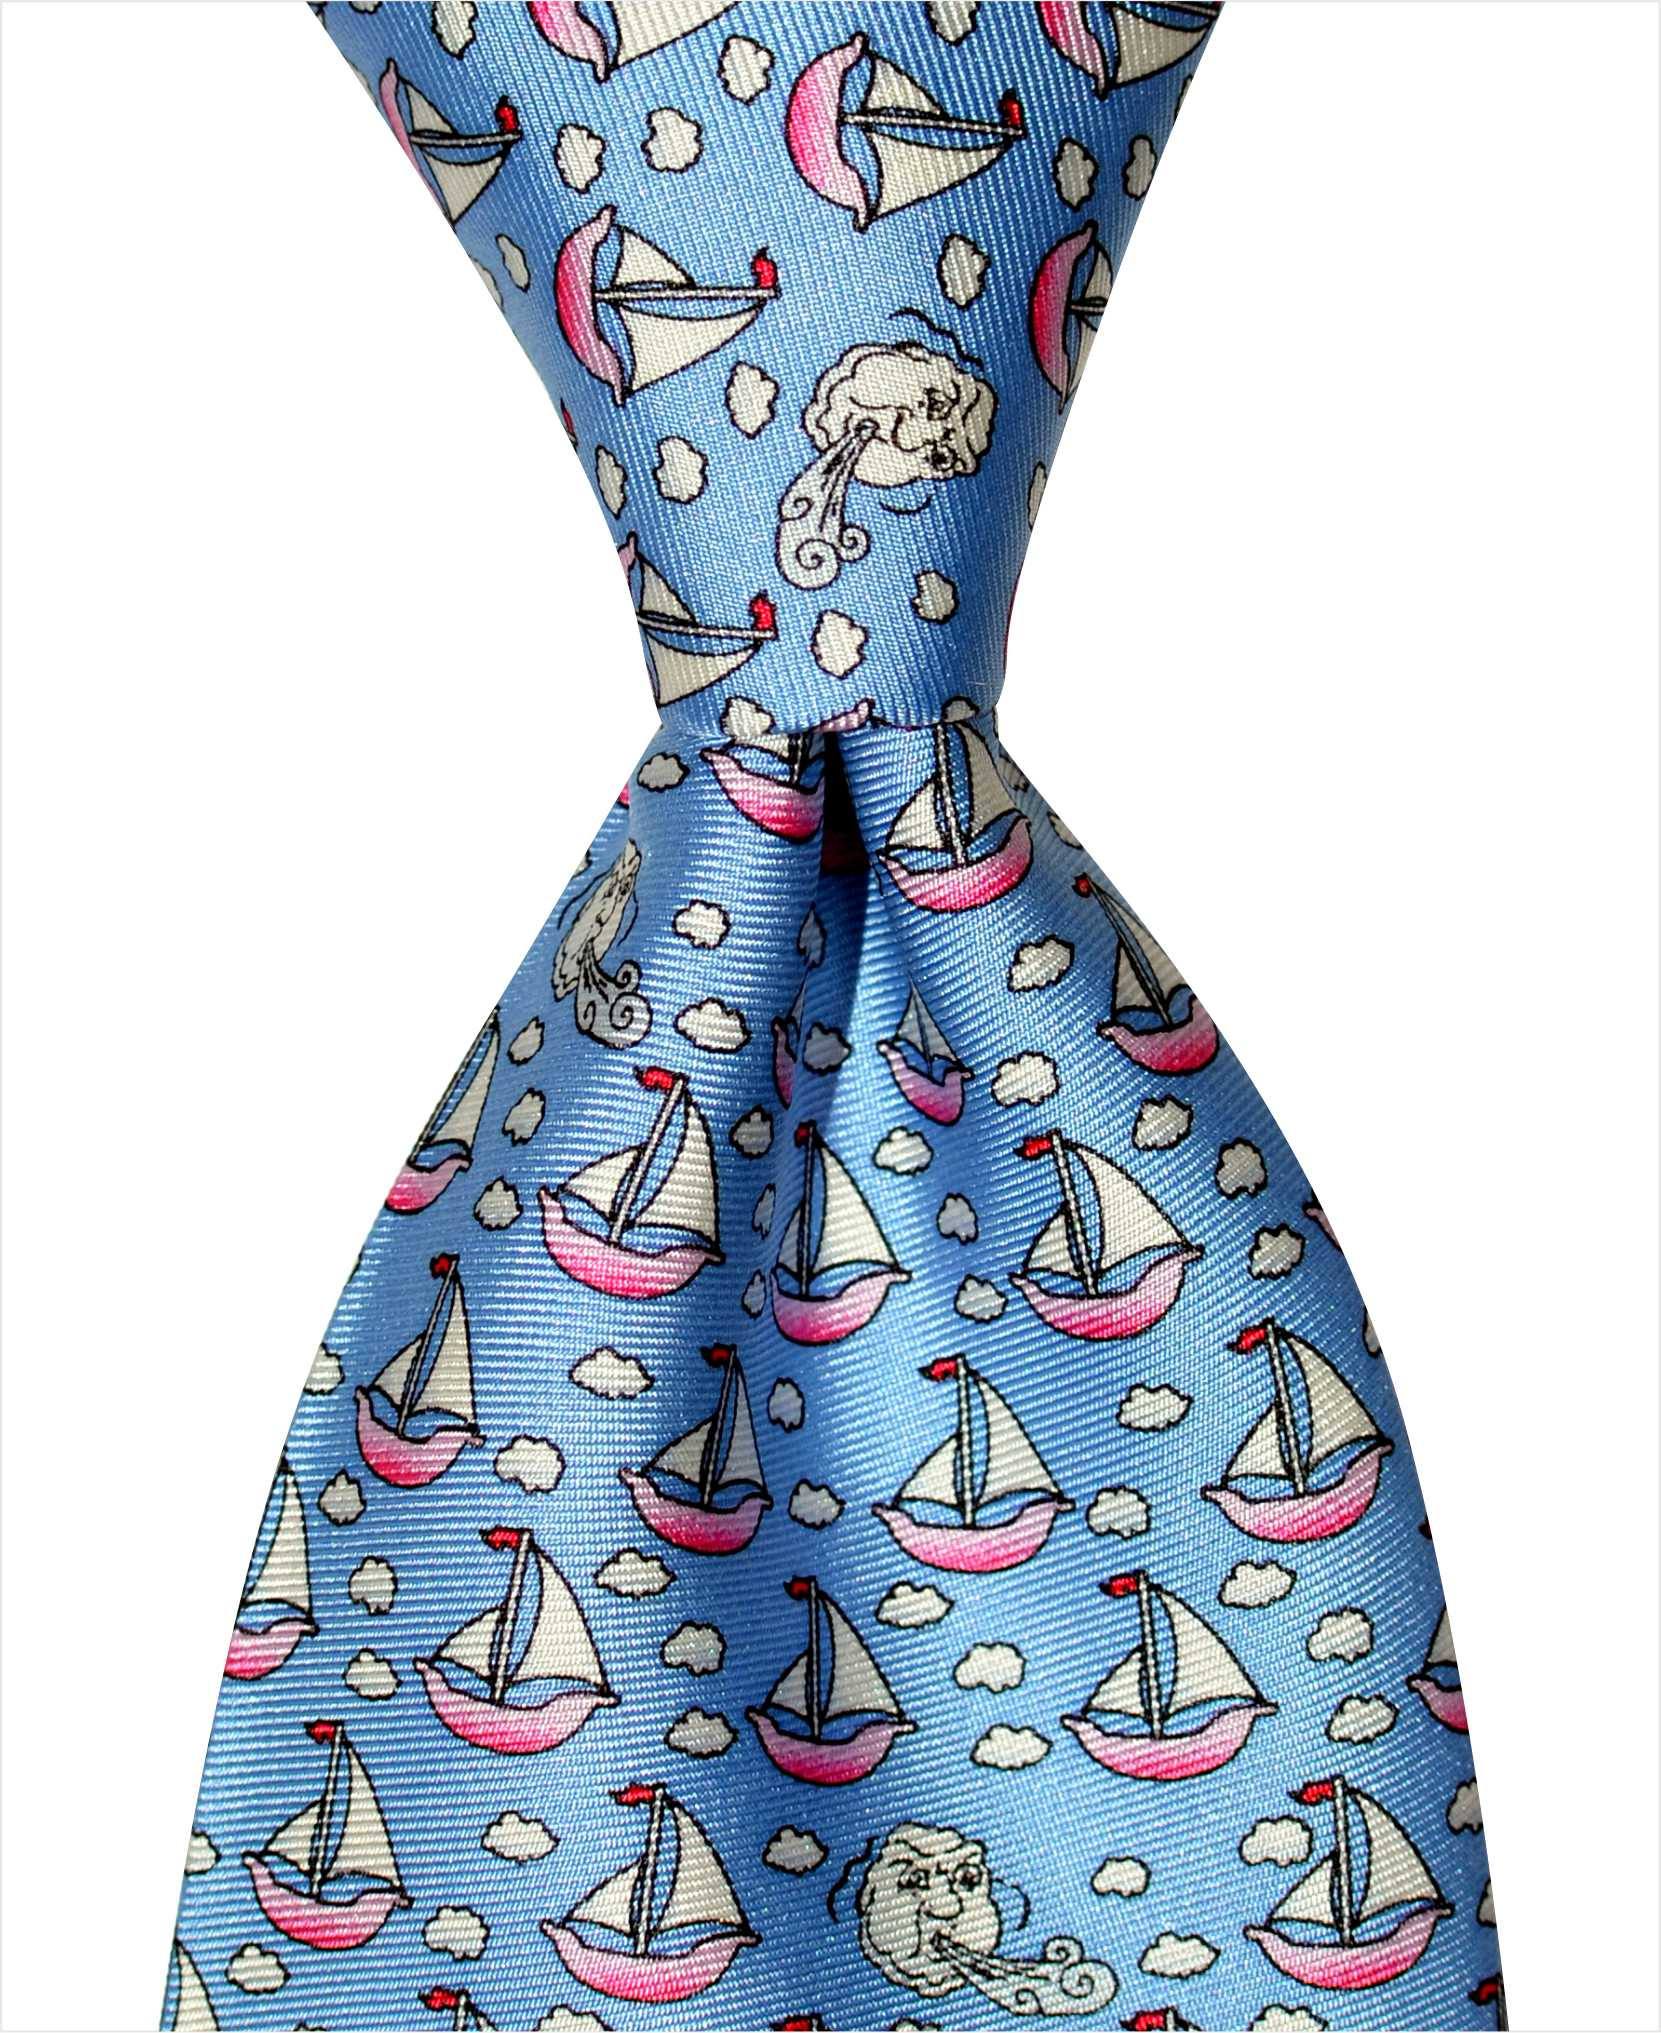 Sailboat Tie - Blue $65.00